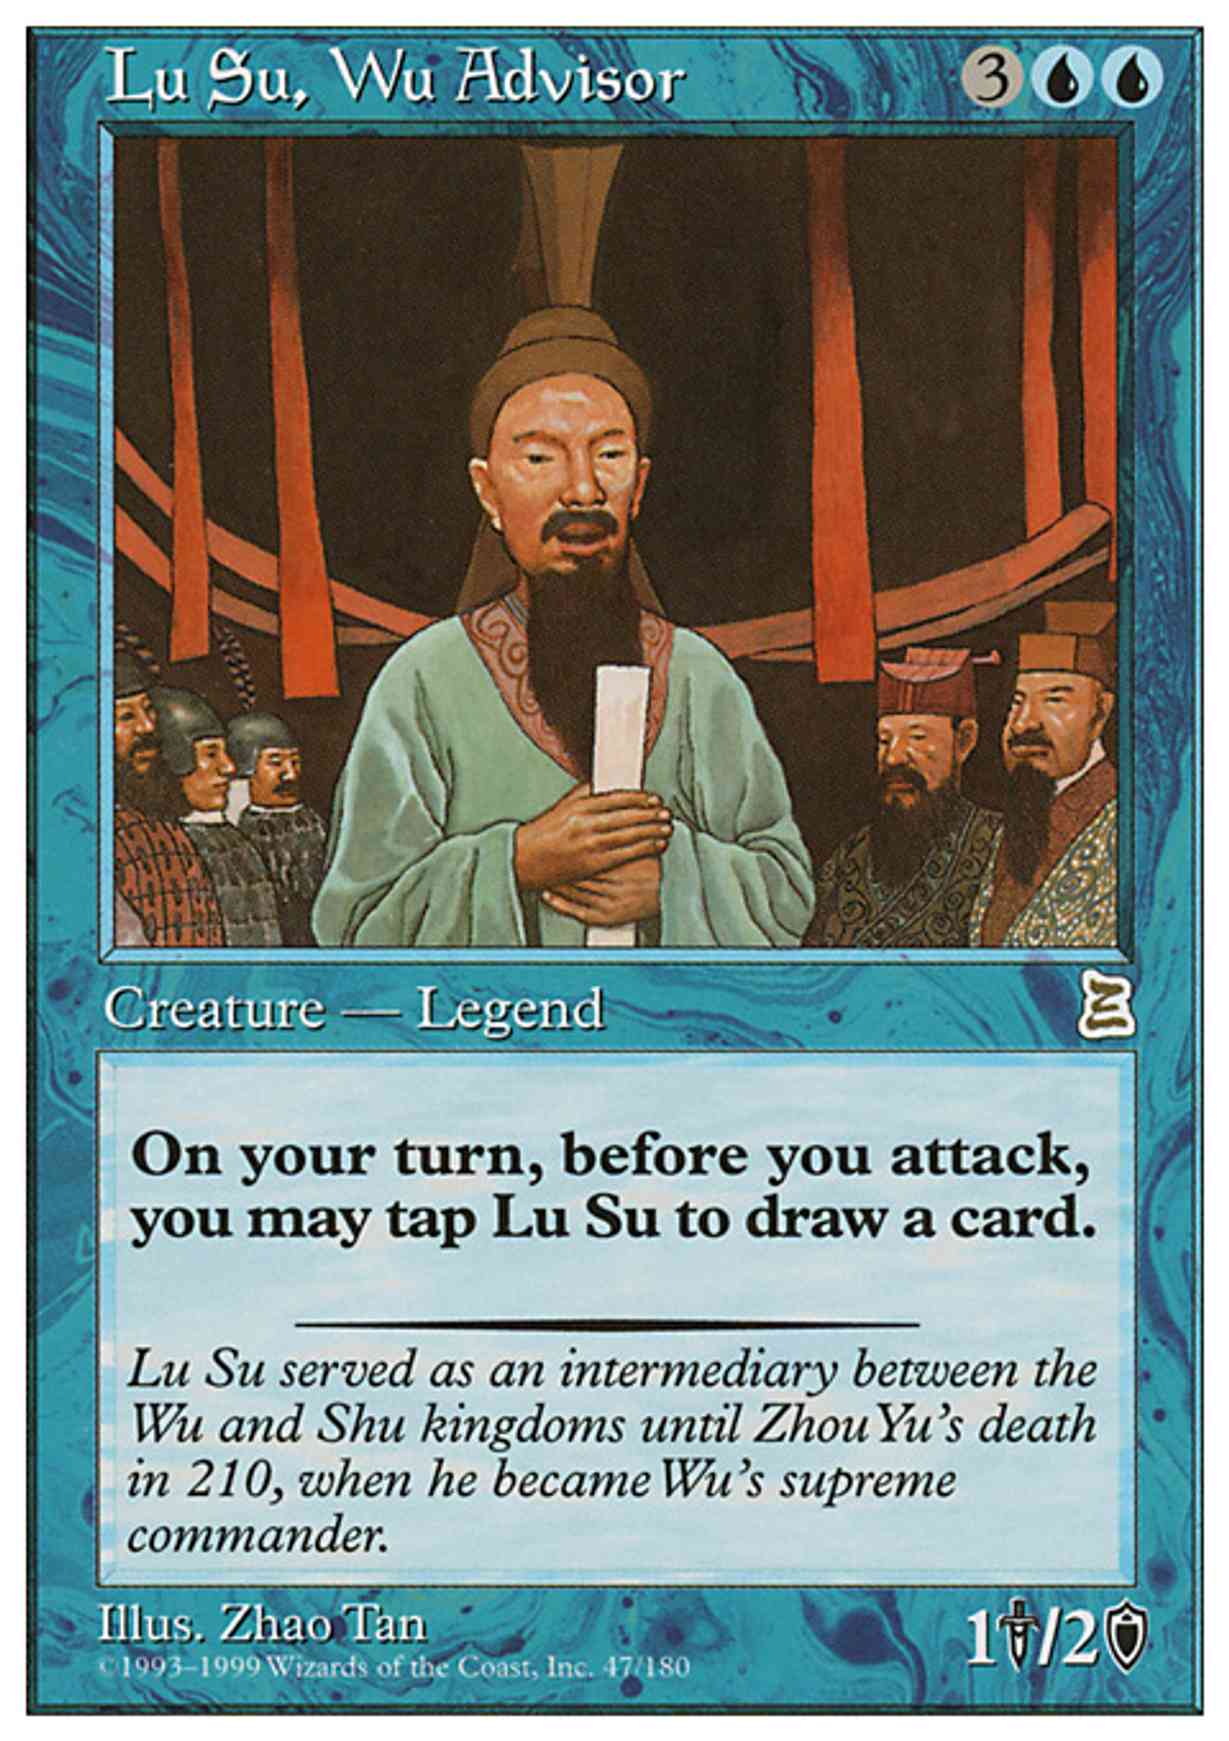 Lu Su, Wu Advisor magic card front